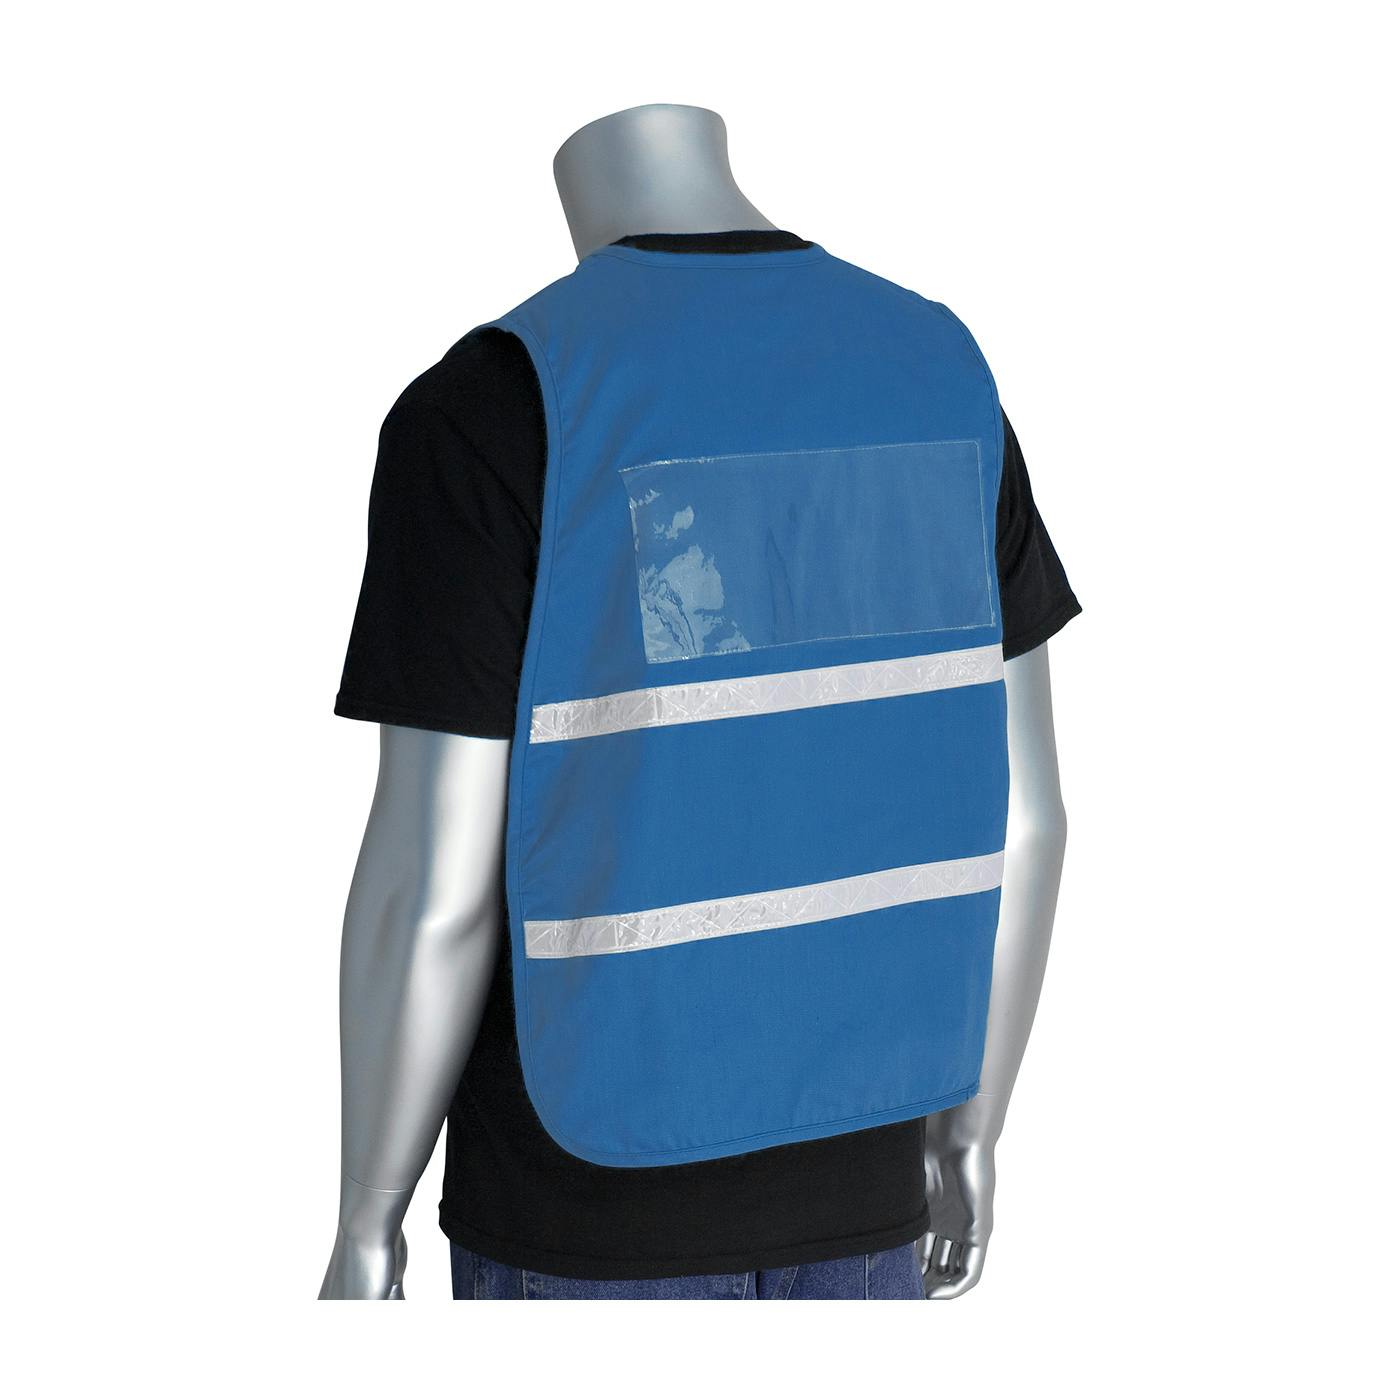 Non-ANSI Incident Command Vest - Cotton/Polyester Blend, Light Blue (300-2509)